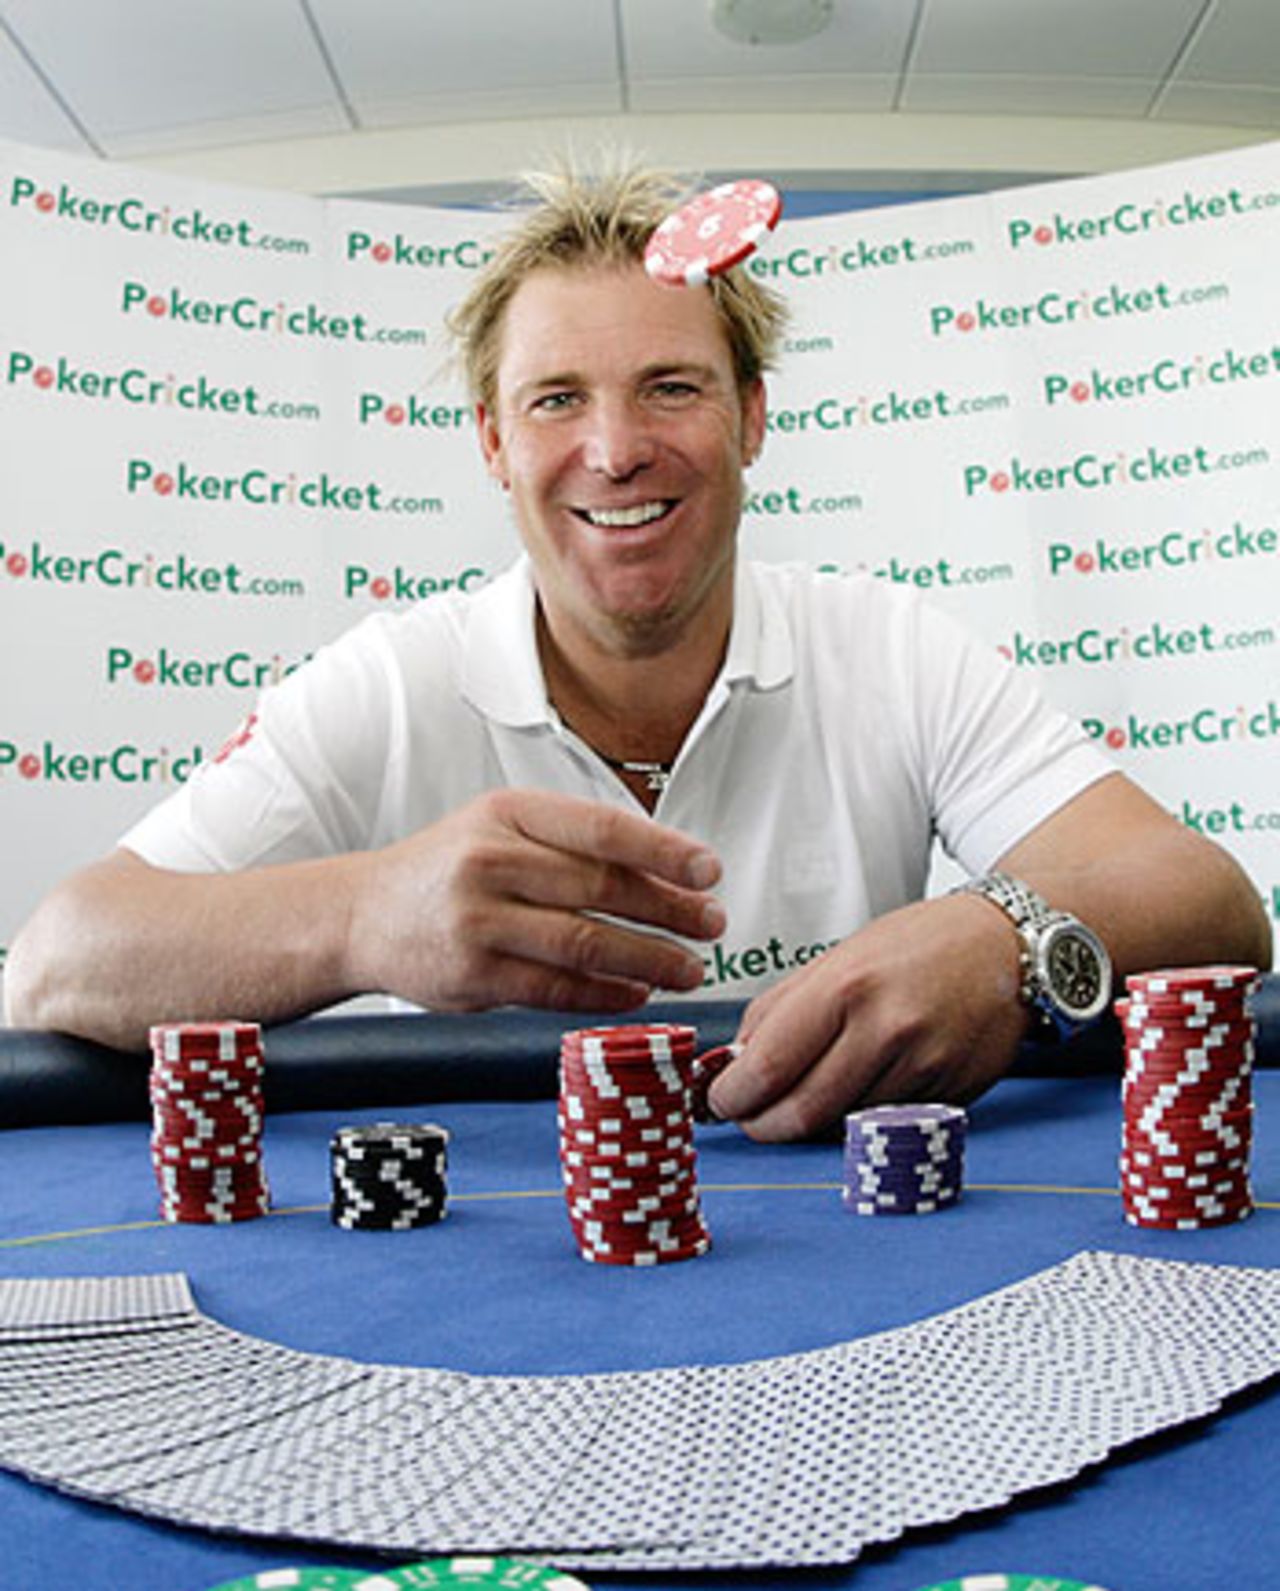 Shane Warne launches pokercricket.com